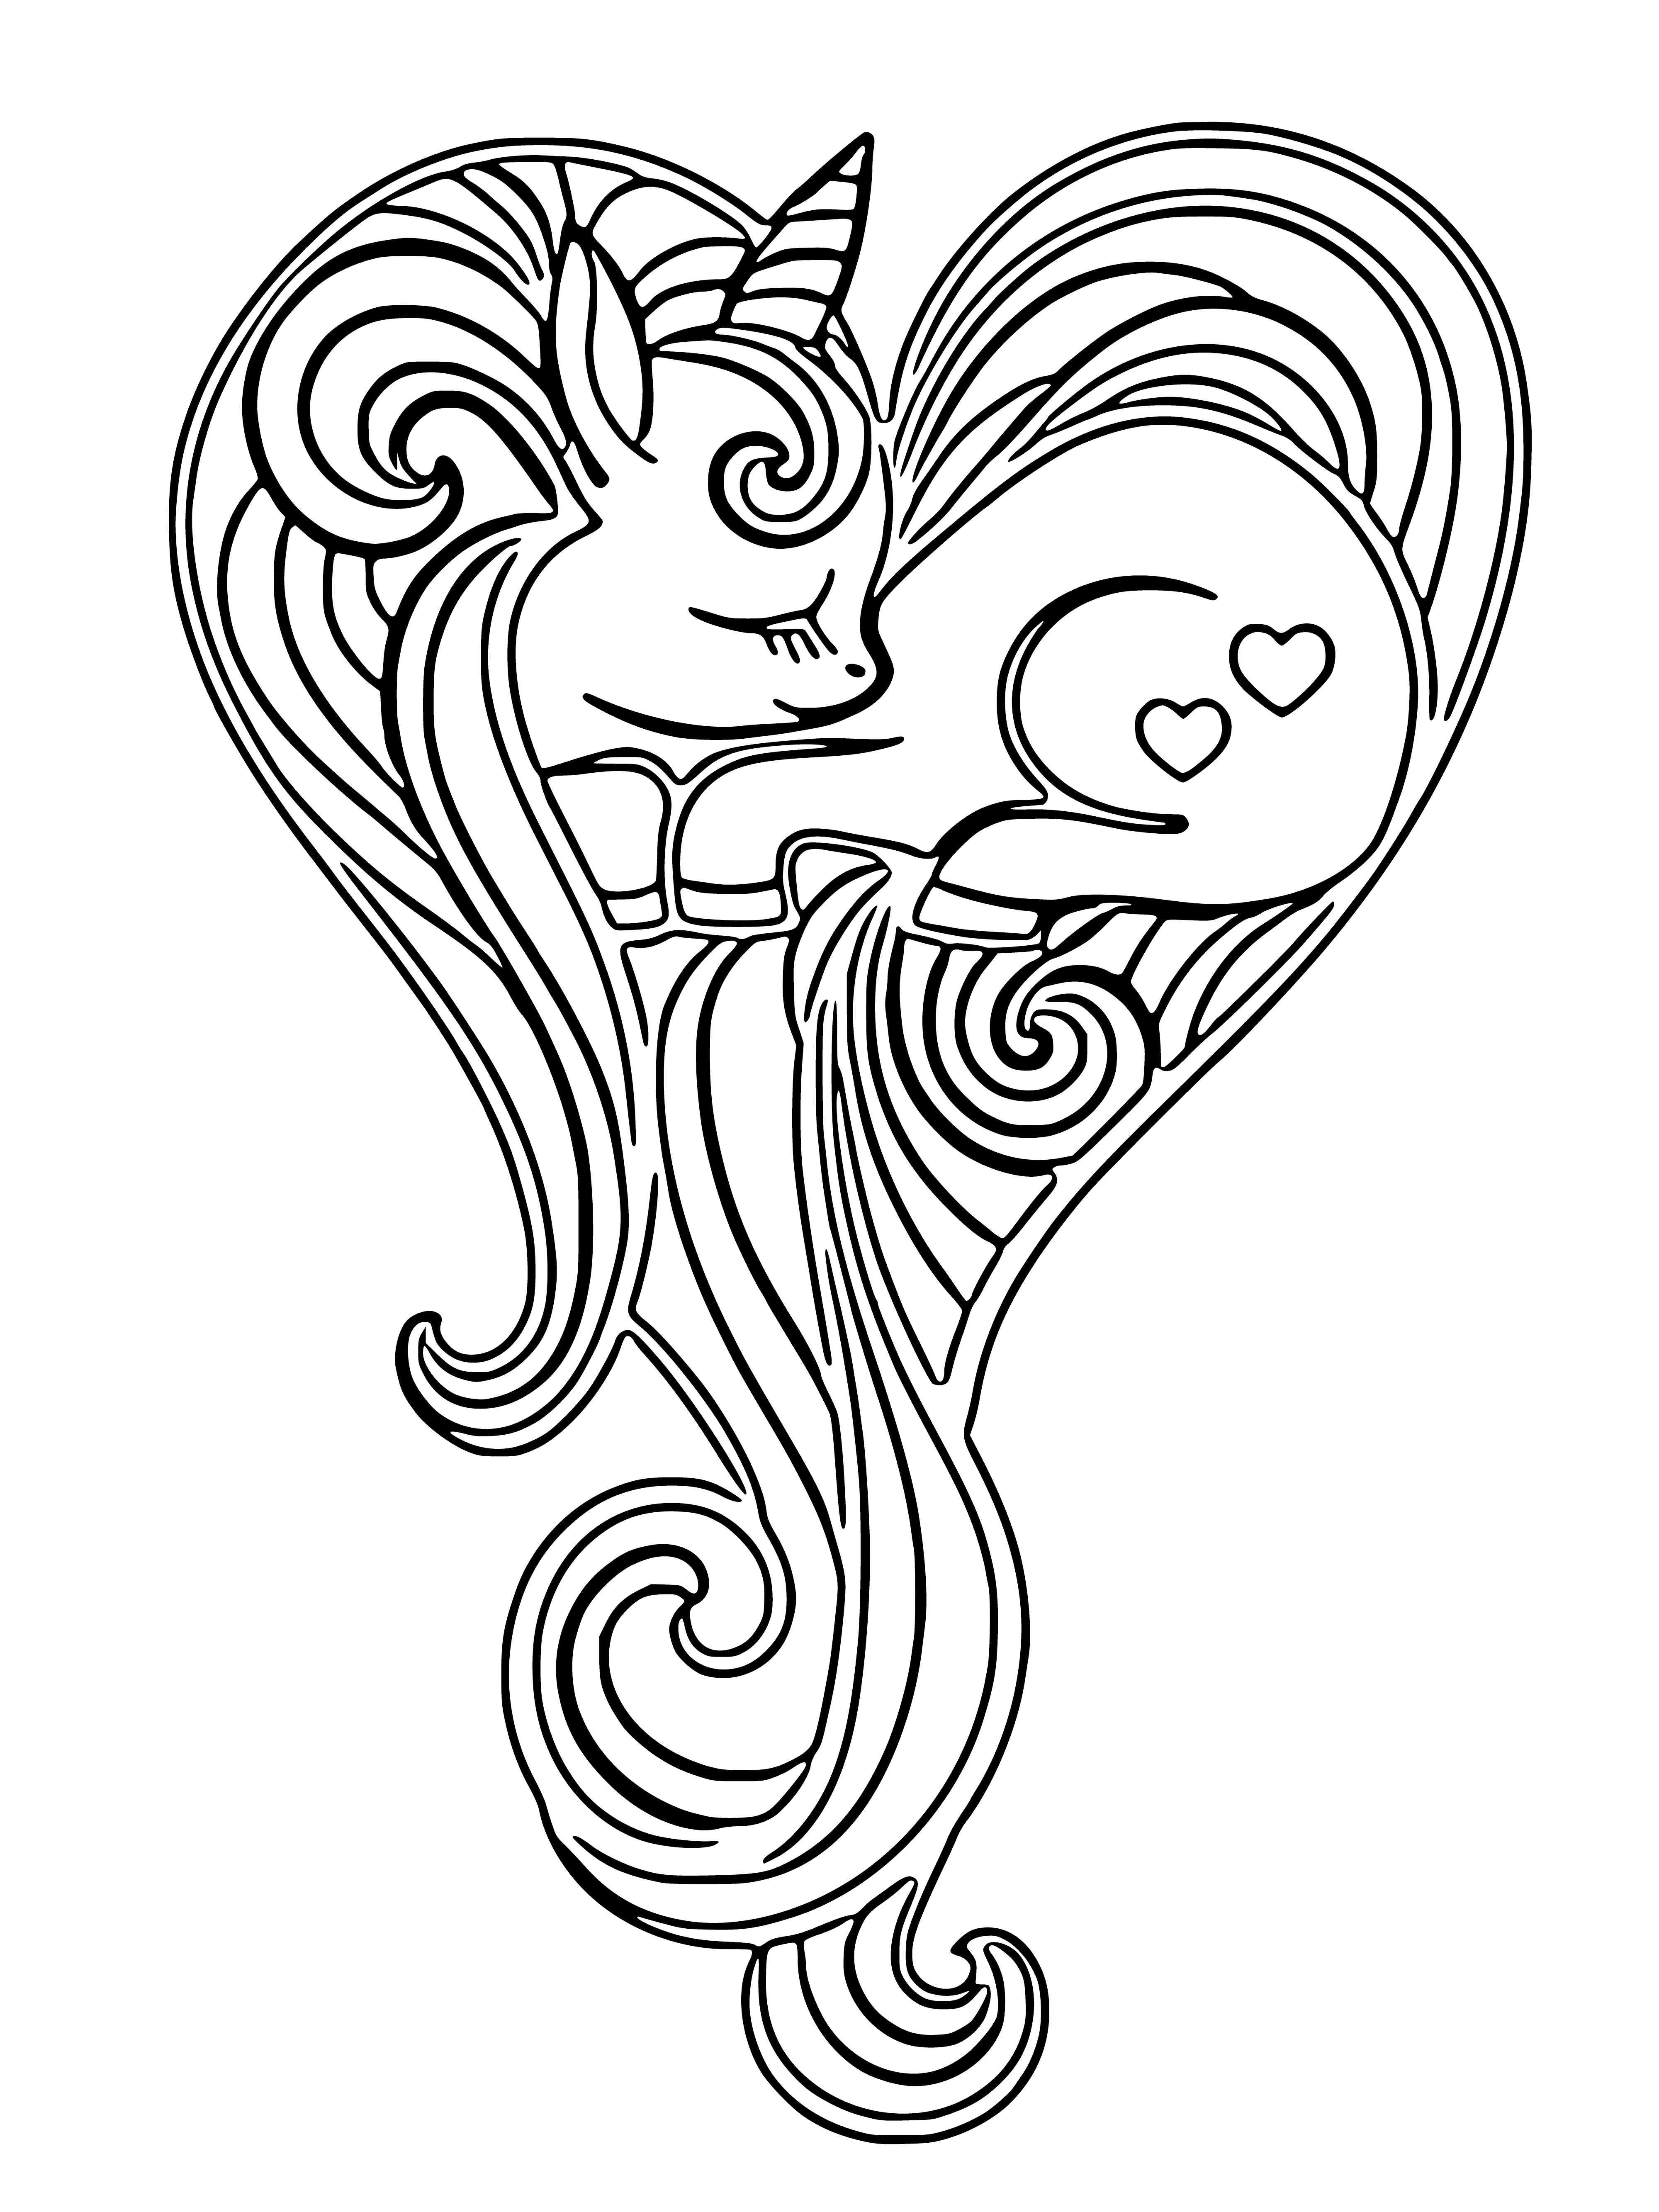 Sleeping unicorn coloring page